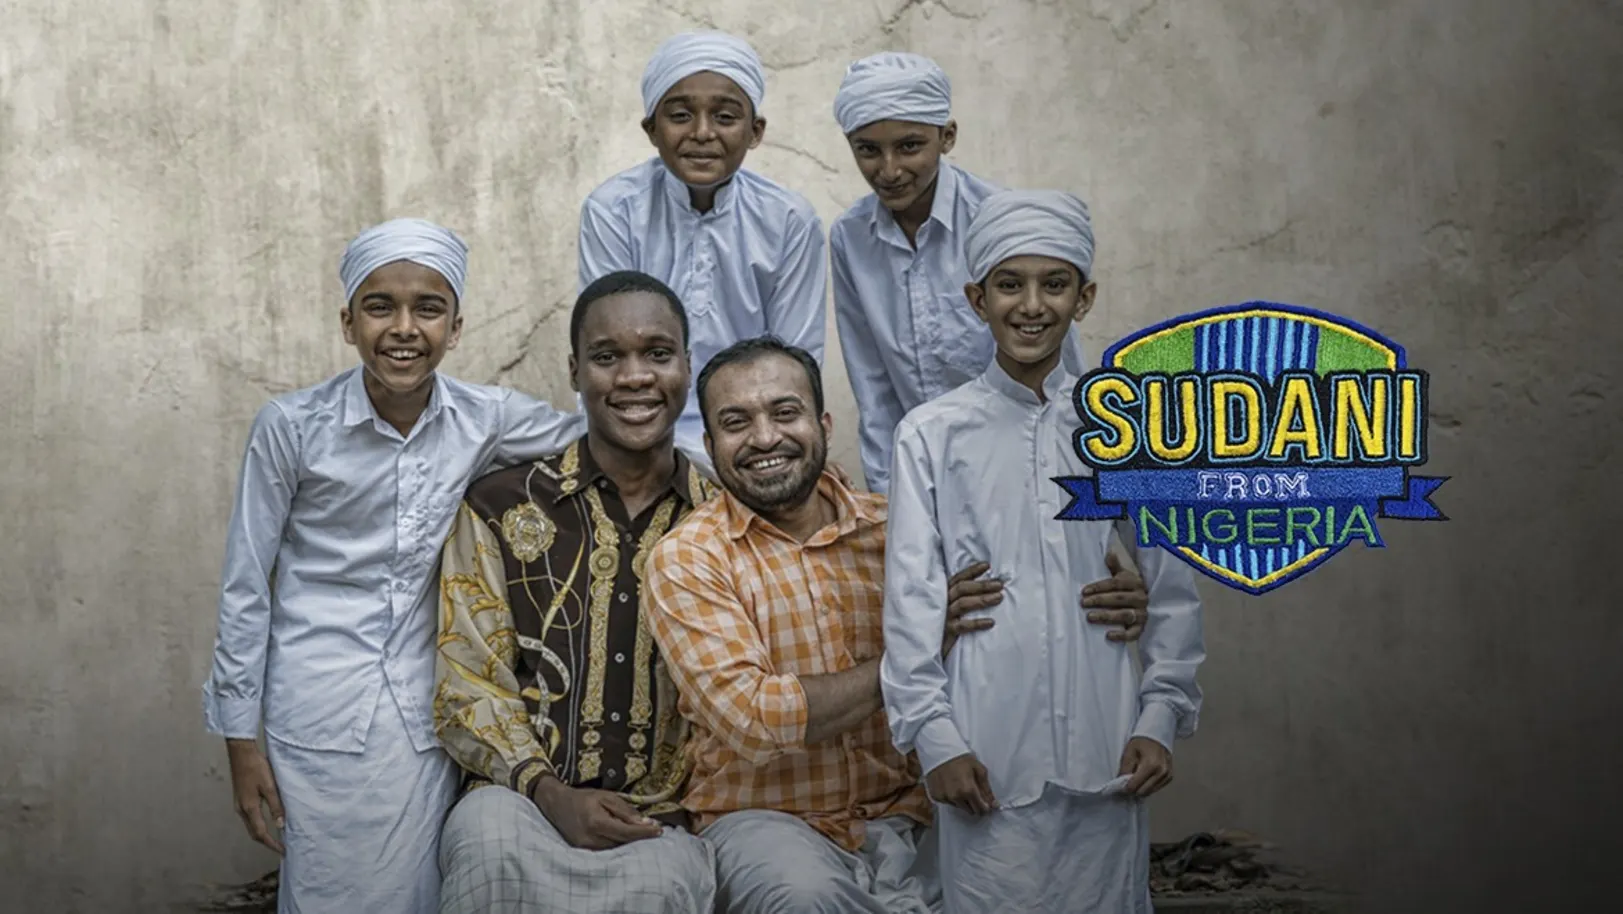 Sudani from Nigeria Movie